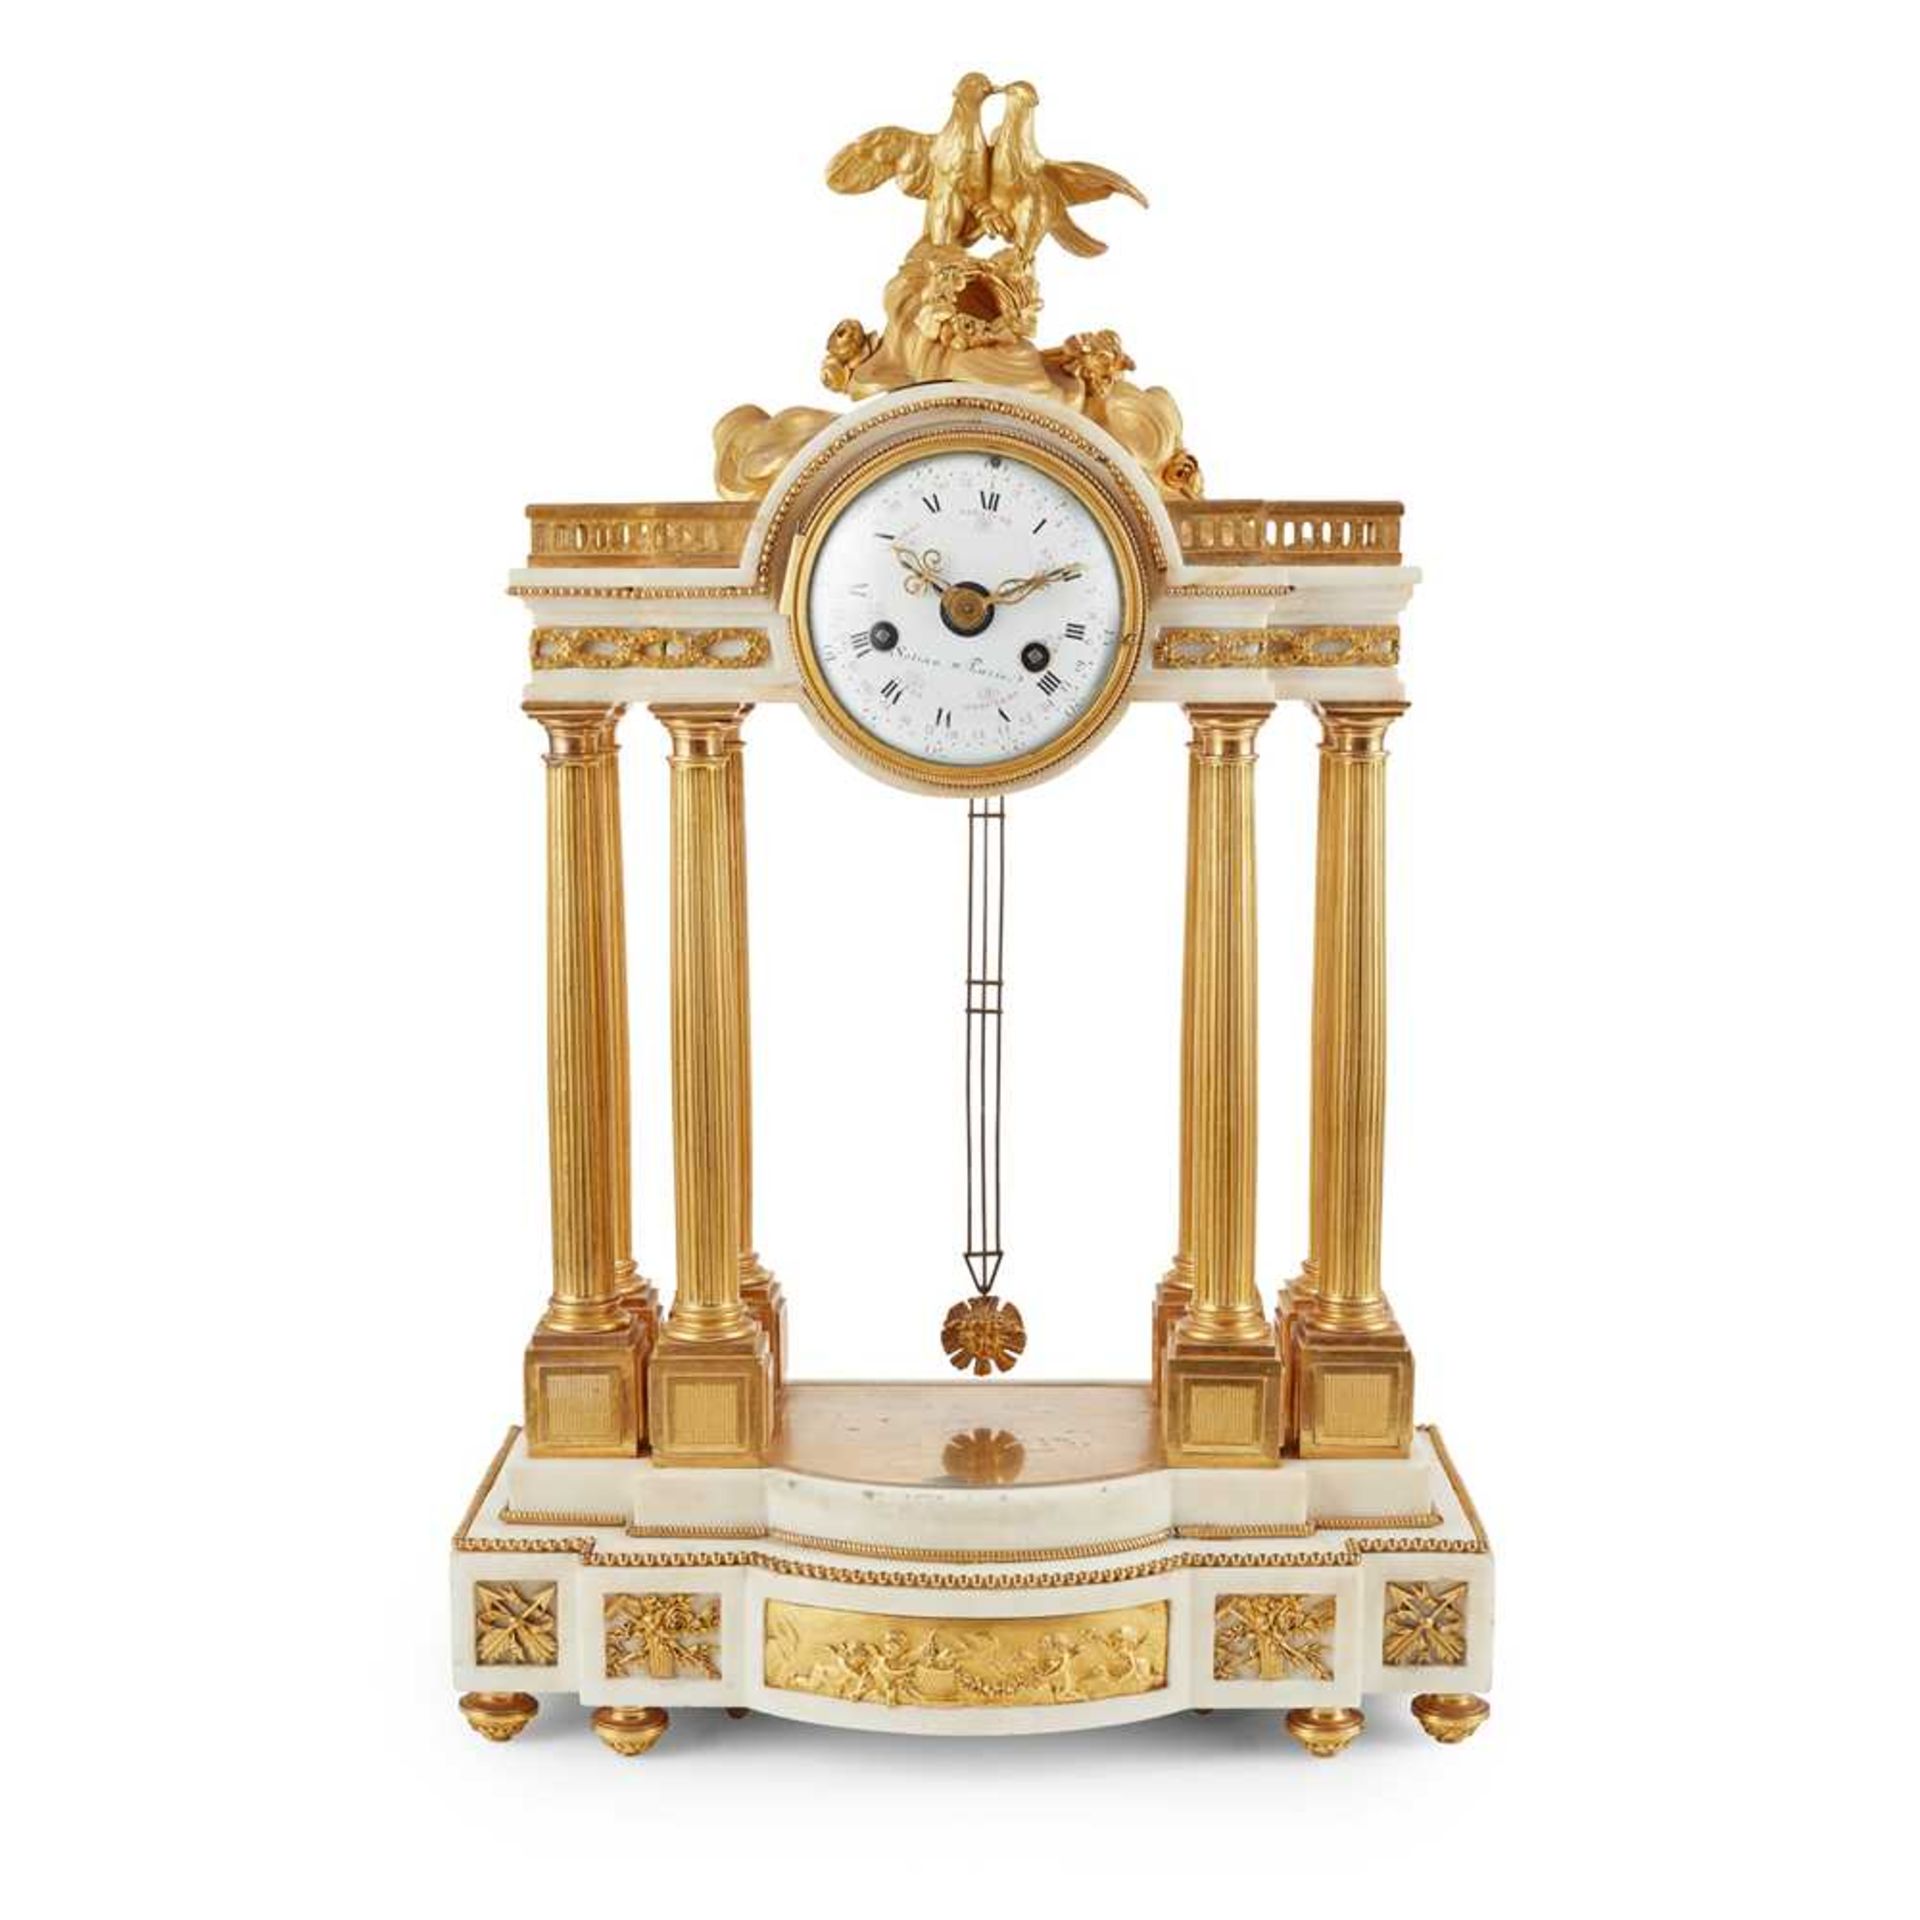 LOUIS XIV STYLE GILT BRONZE AND MARBLE MANTEL CLOCK, SOTIAU, PARIS 18TH CENTURY